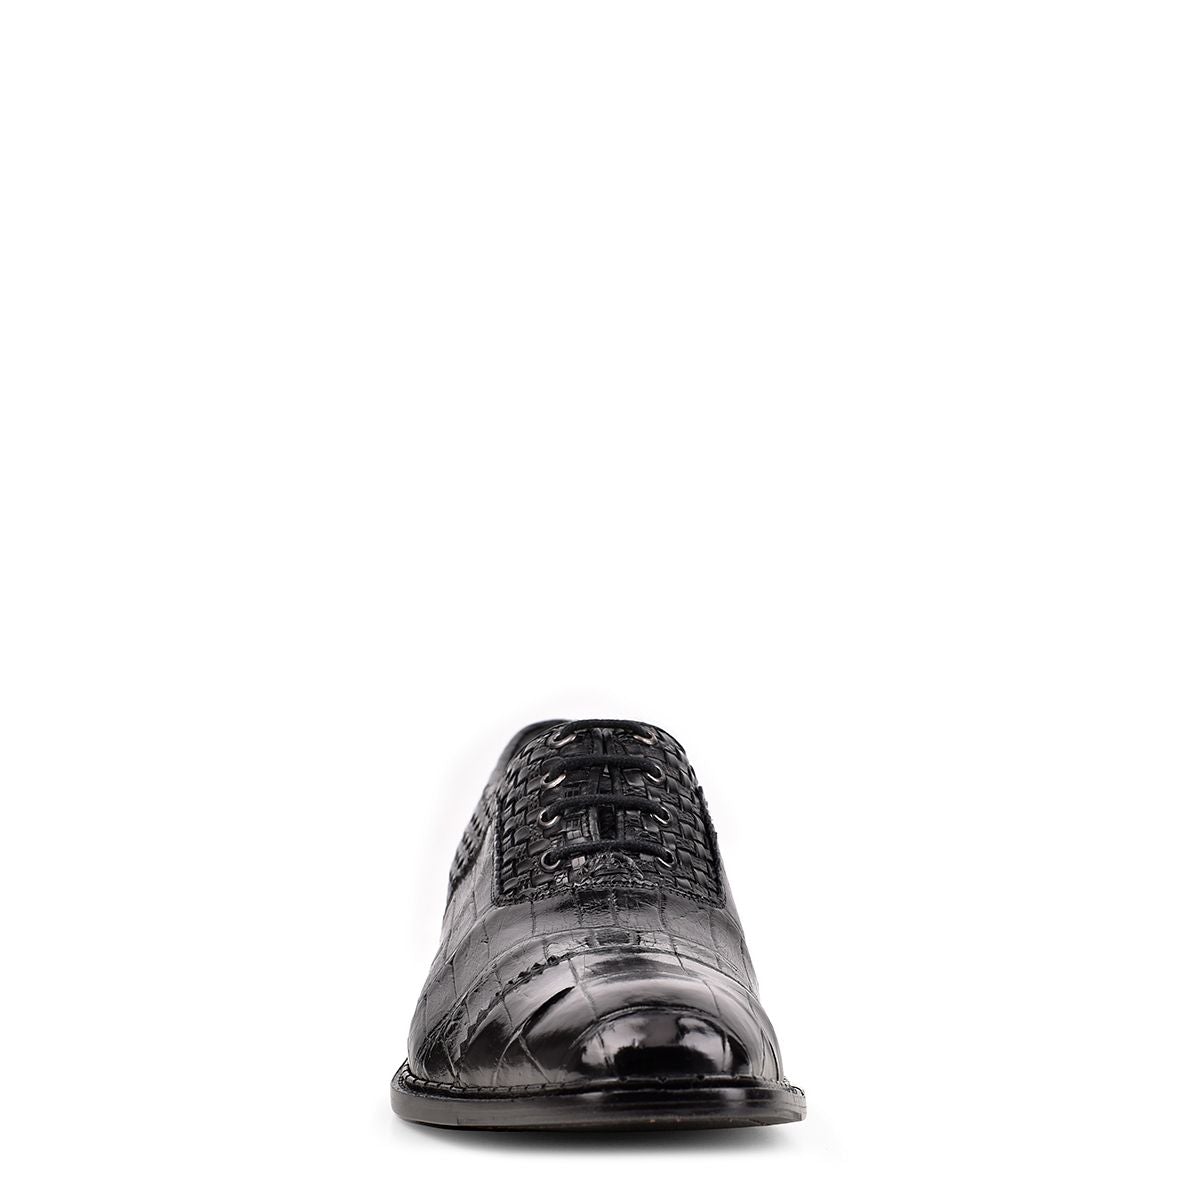 42FLPTE - Cuadra black fashion dress alligator woven oxford shoes for men-Kuet.us